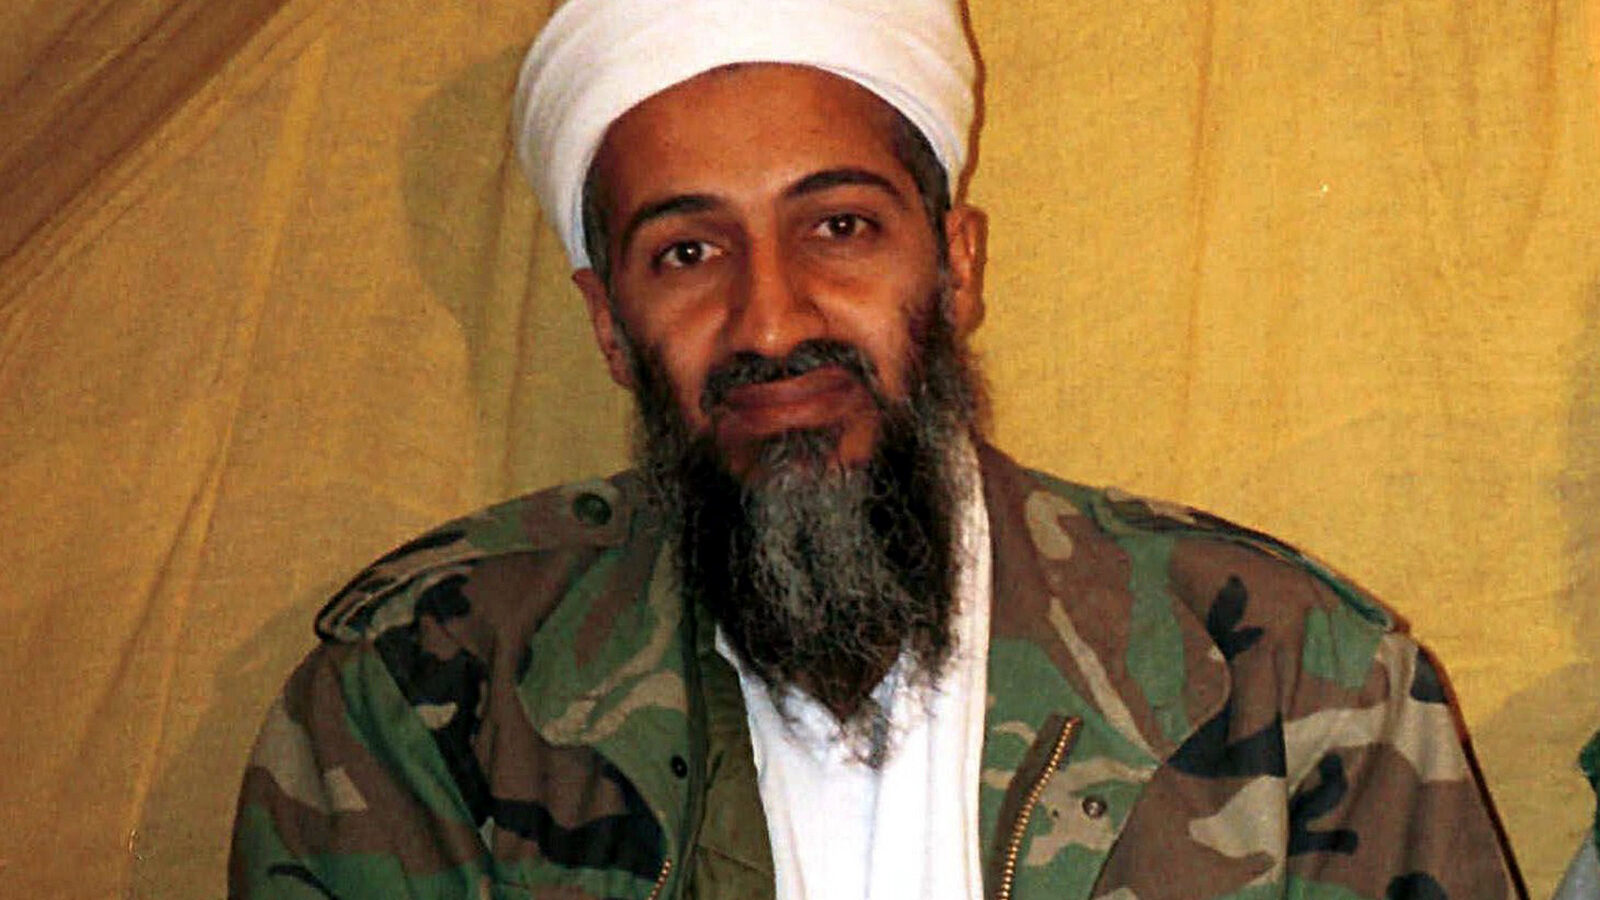 This undated file photo shows al Qaida leader Osama bin Laden in Afghanistan. (AP Photo)